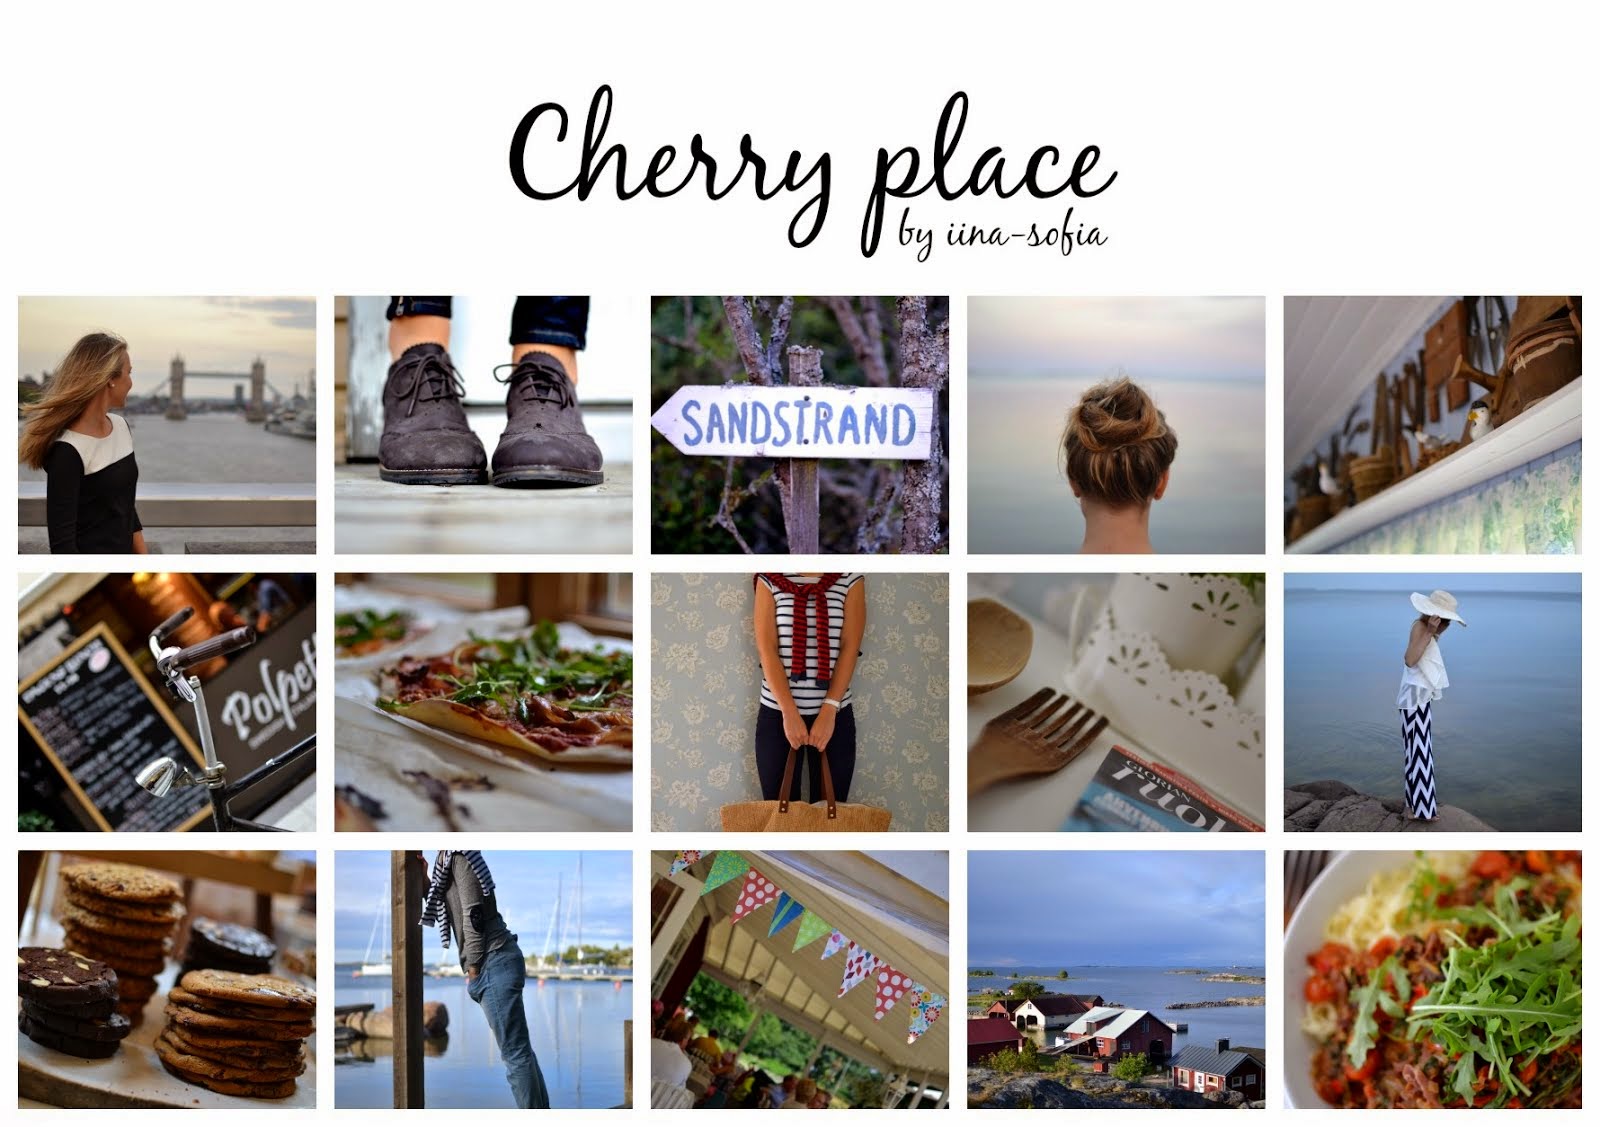 cherry-place